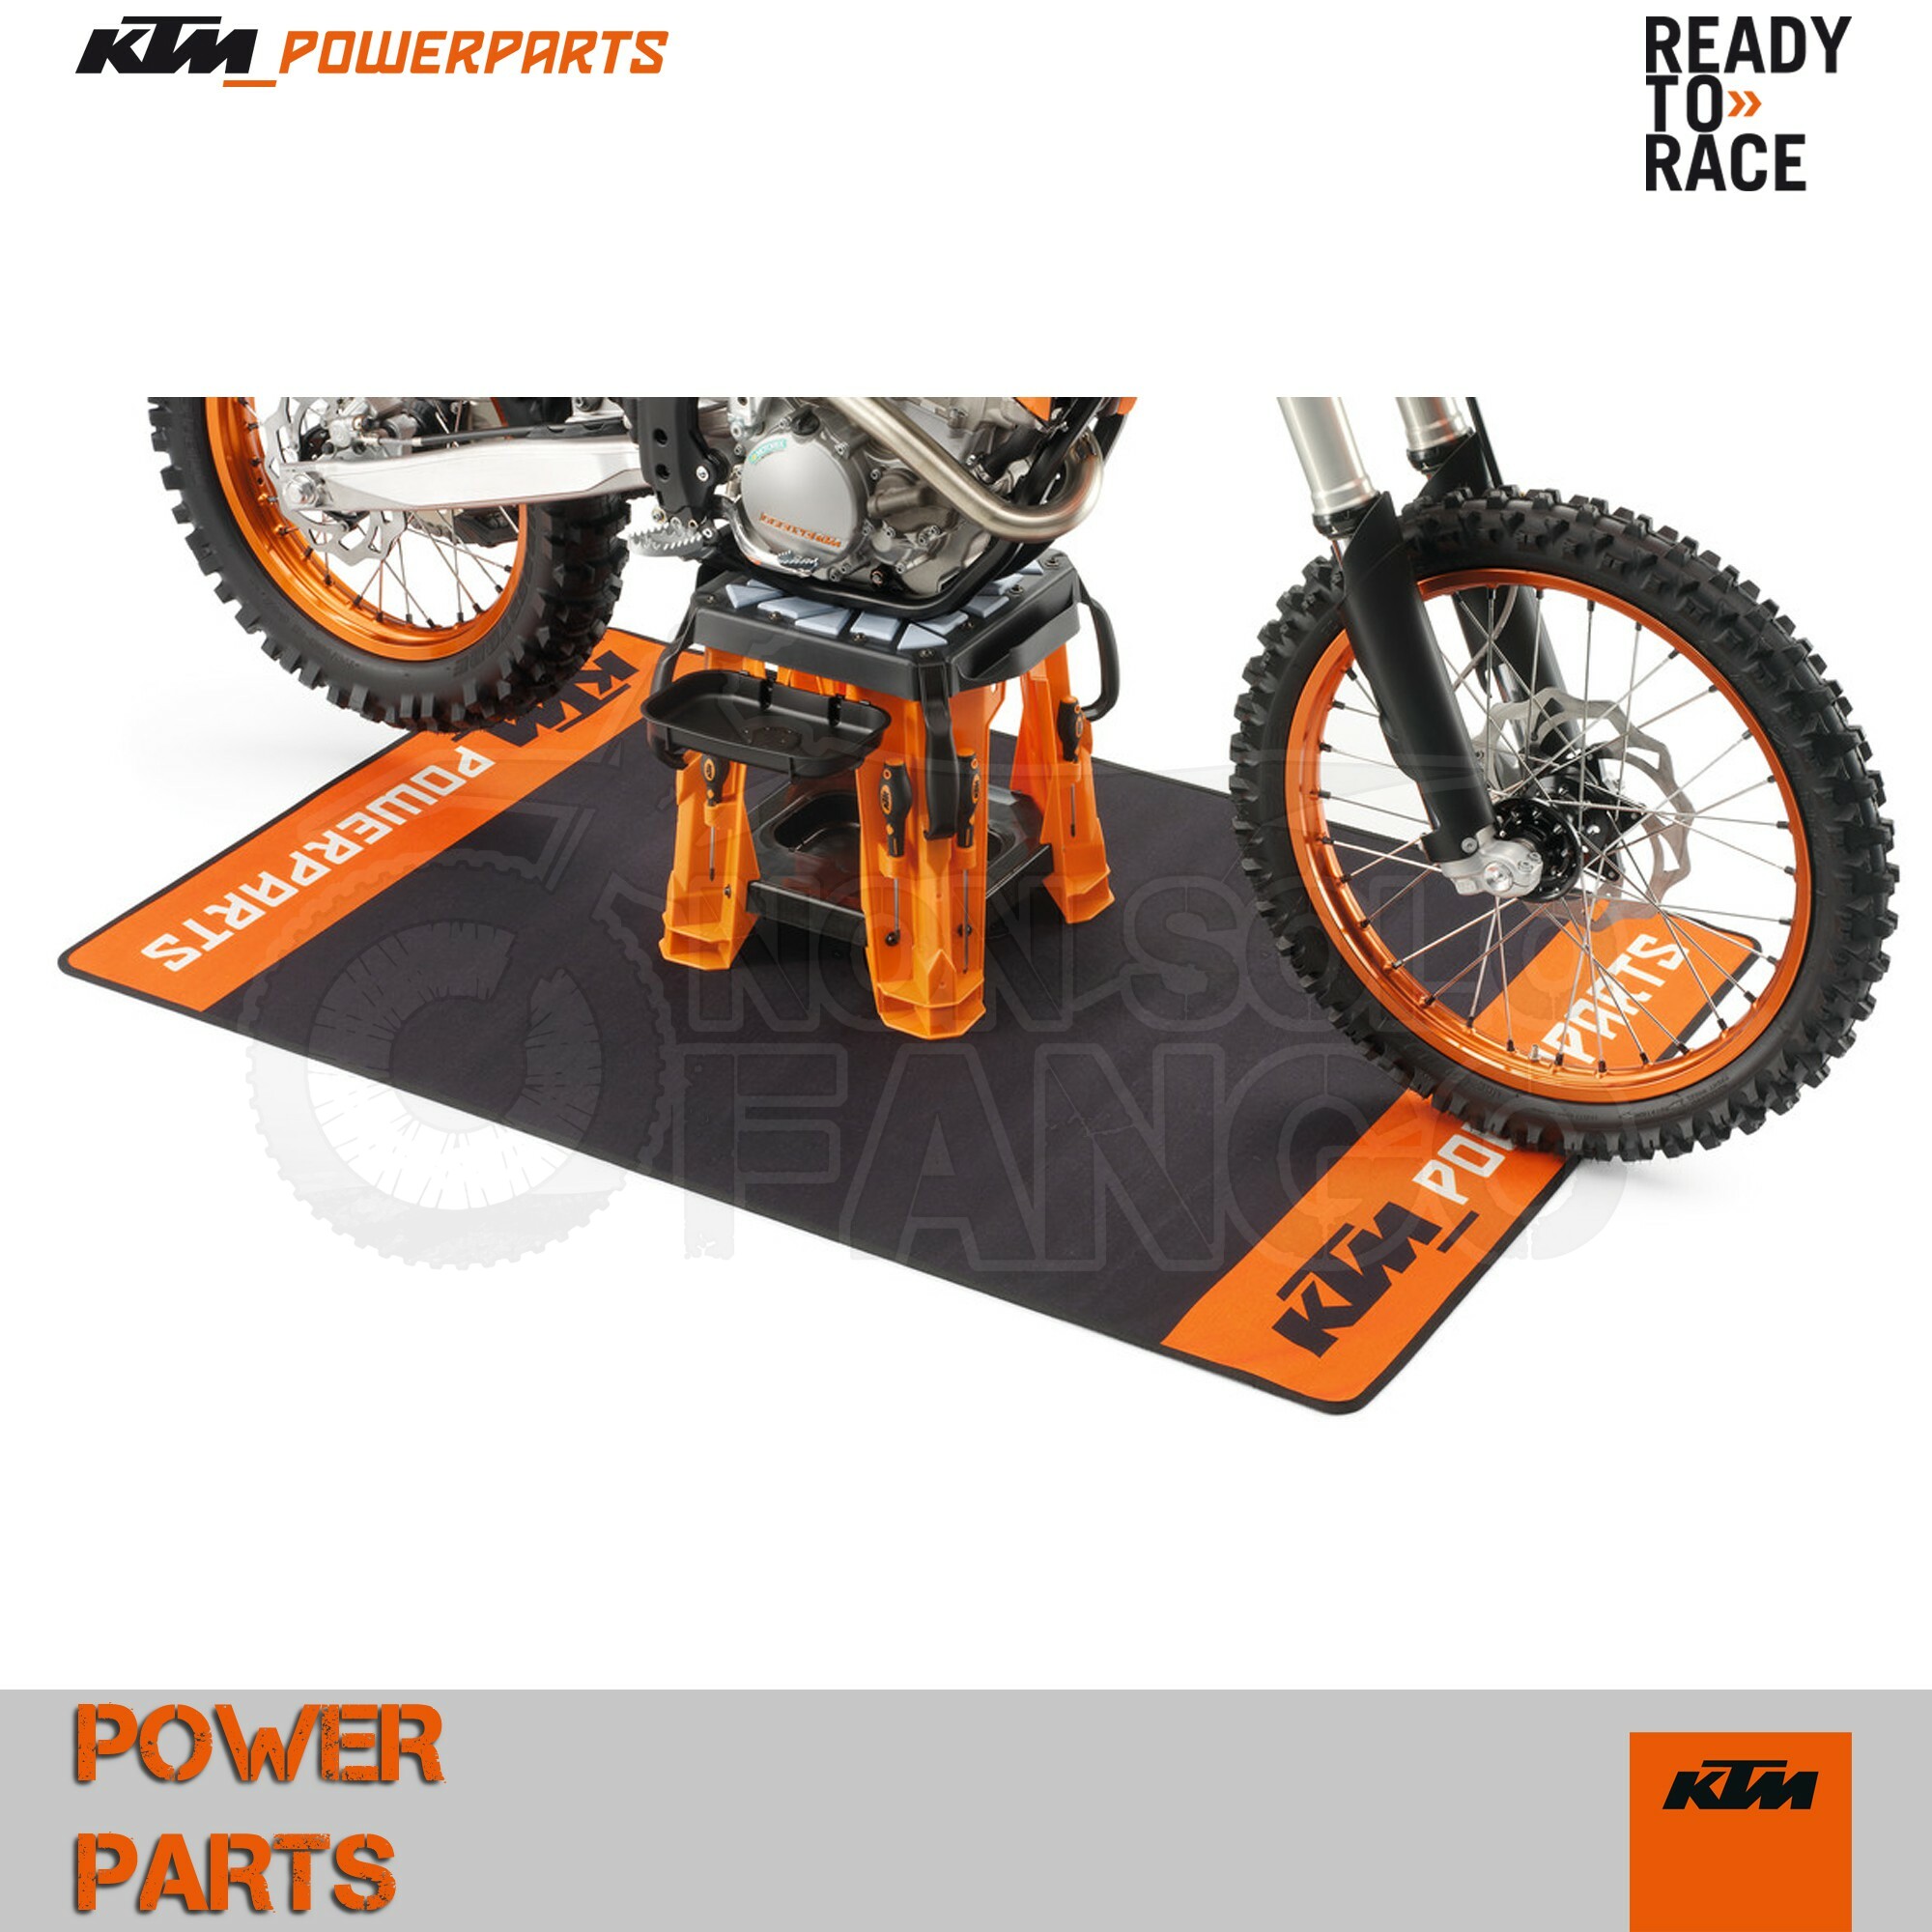 Tappeto assistenza moto KTM Power Parts